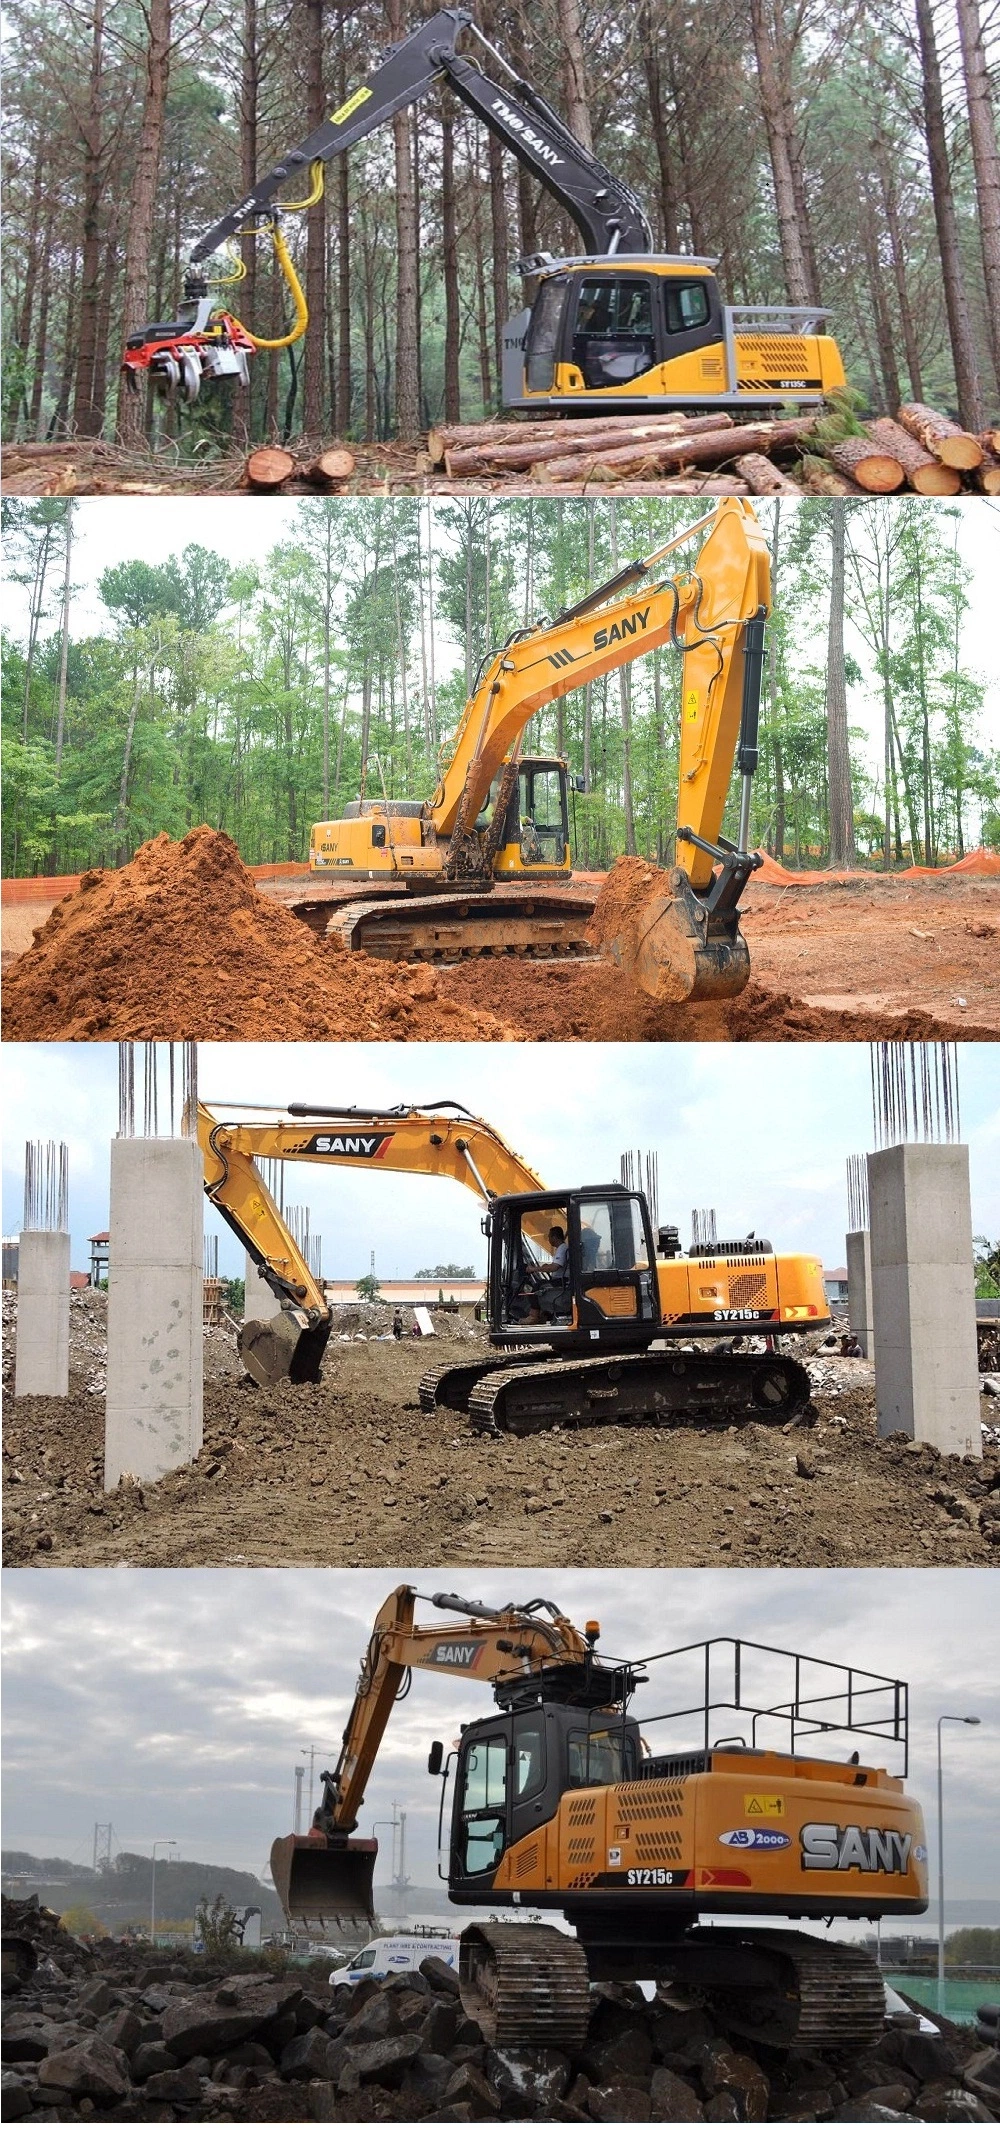 Sany Sy215c Hydraulic Sand Excavator for Sale Buy Crawler Excavator